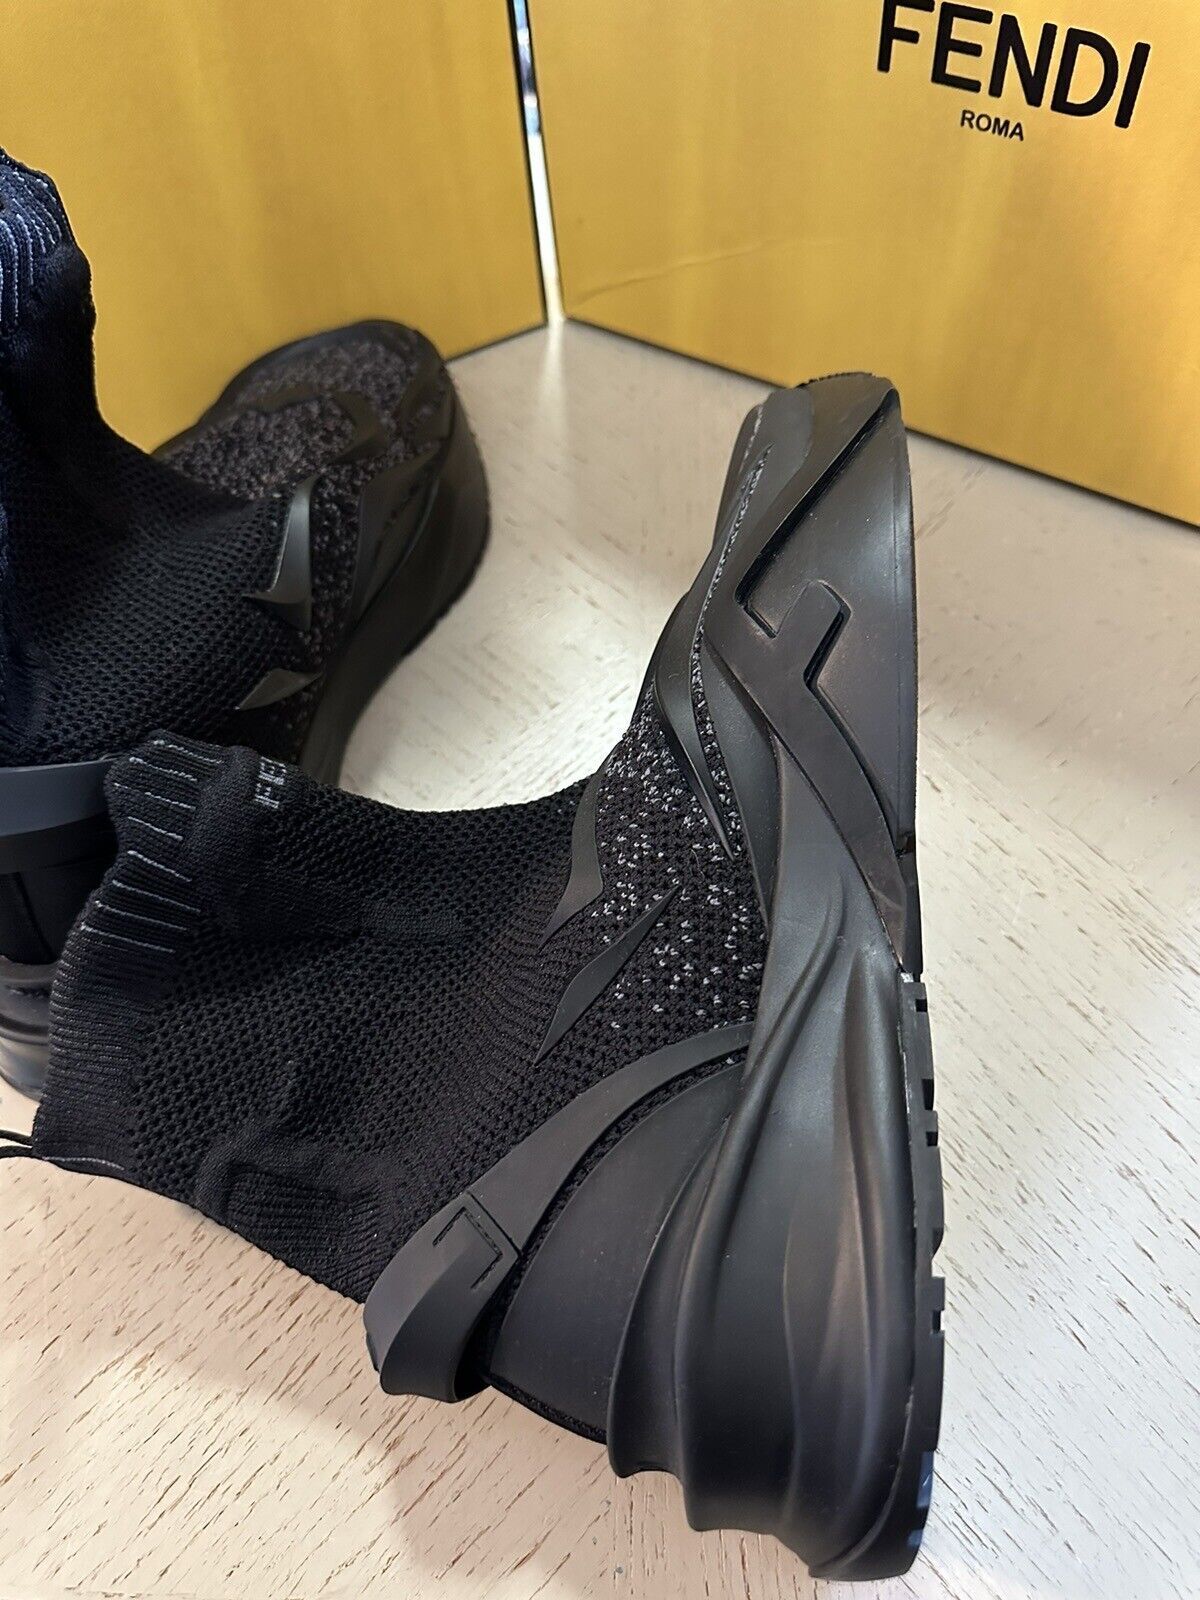 Fendi Contrast Knit High Top Sock Sneakers Shoes Black 14 US 7E1554 NIB $1190